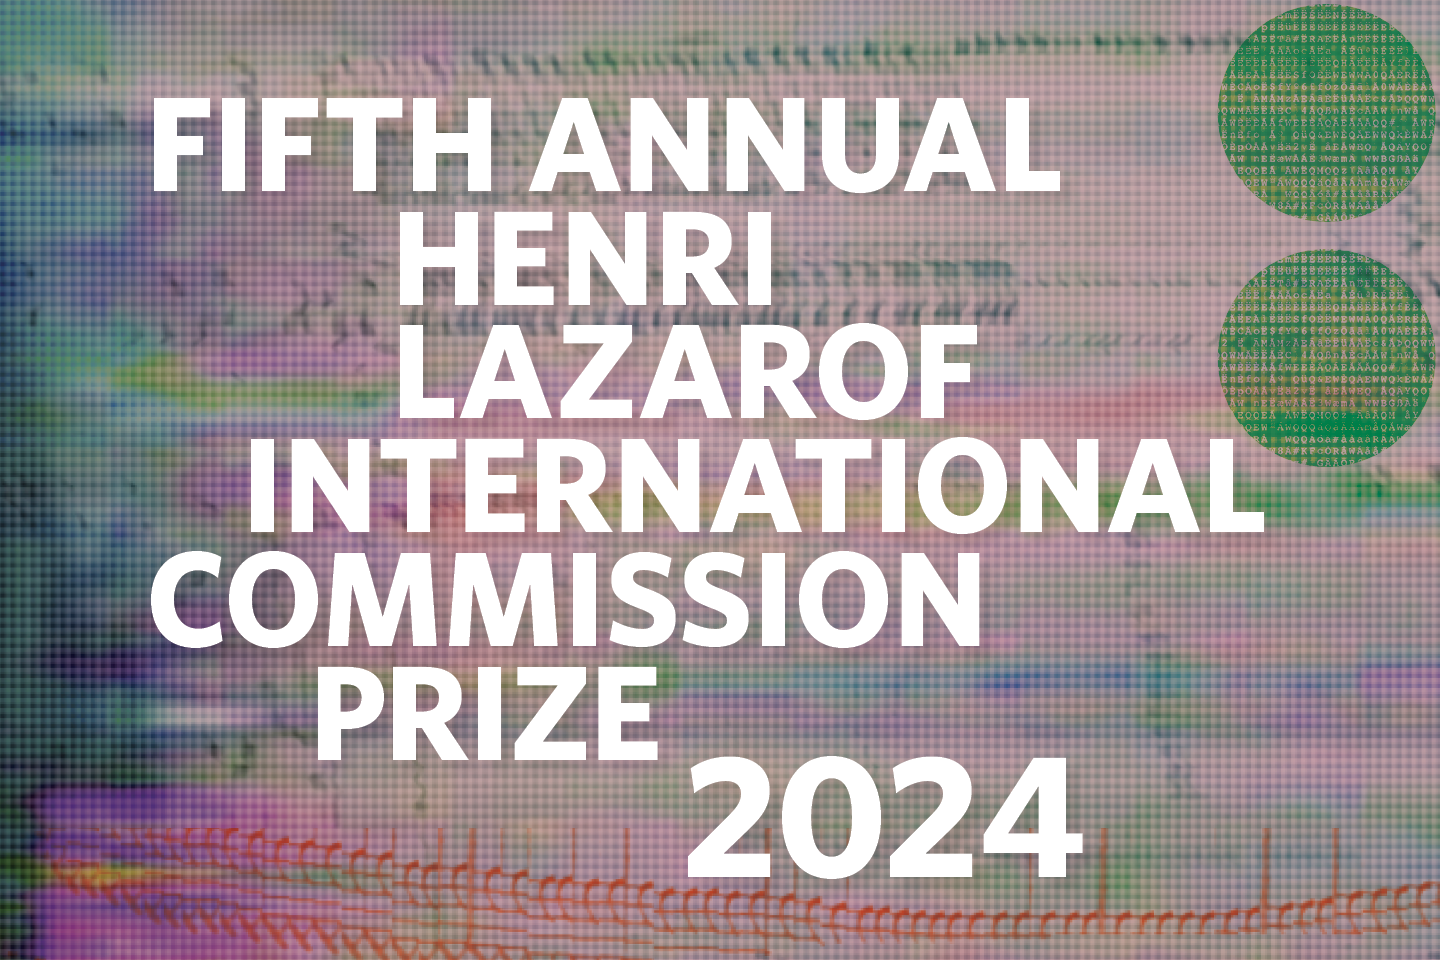 Fifth Annual Henri Lazarof International Commission Prize on a purple background